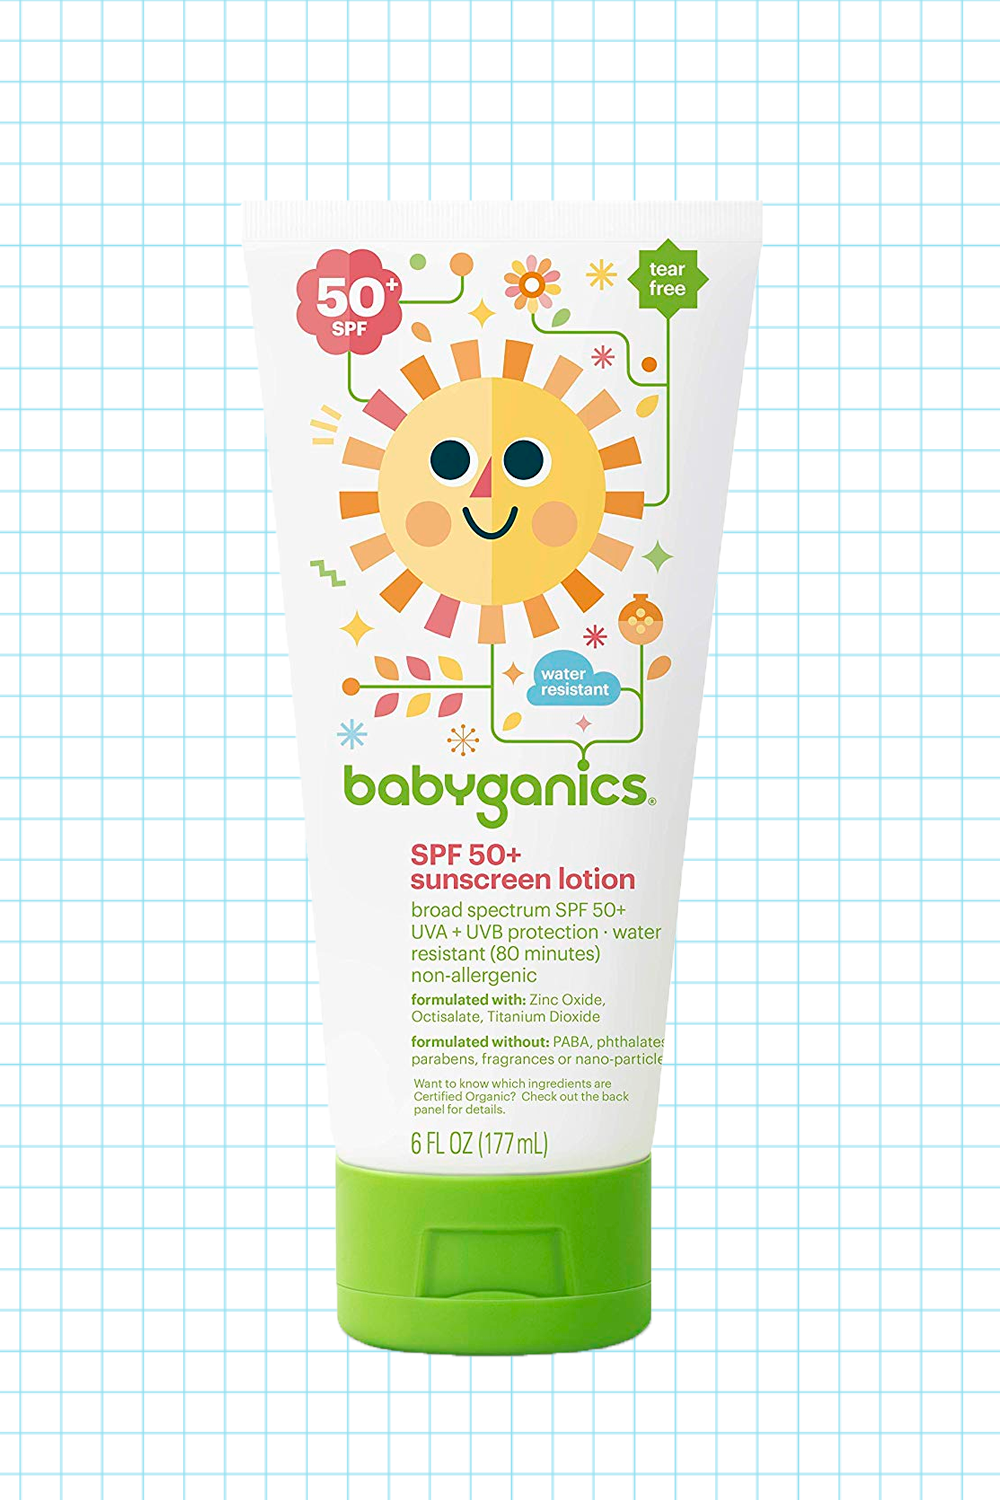 does babyganics sunscreen have oxybenzone